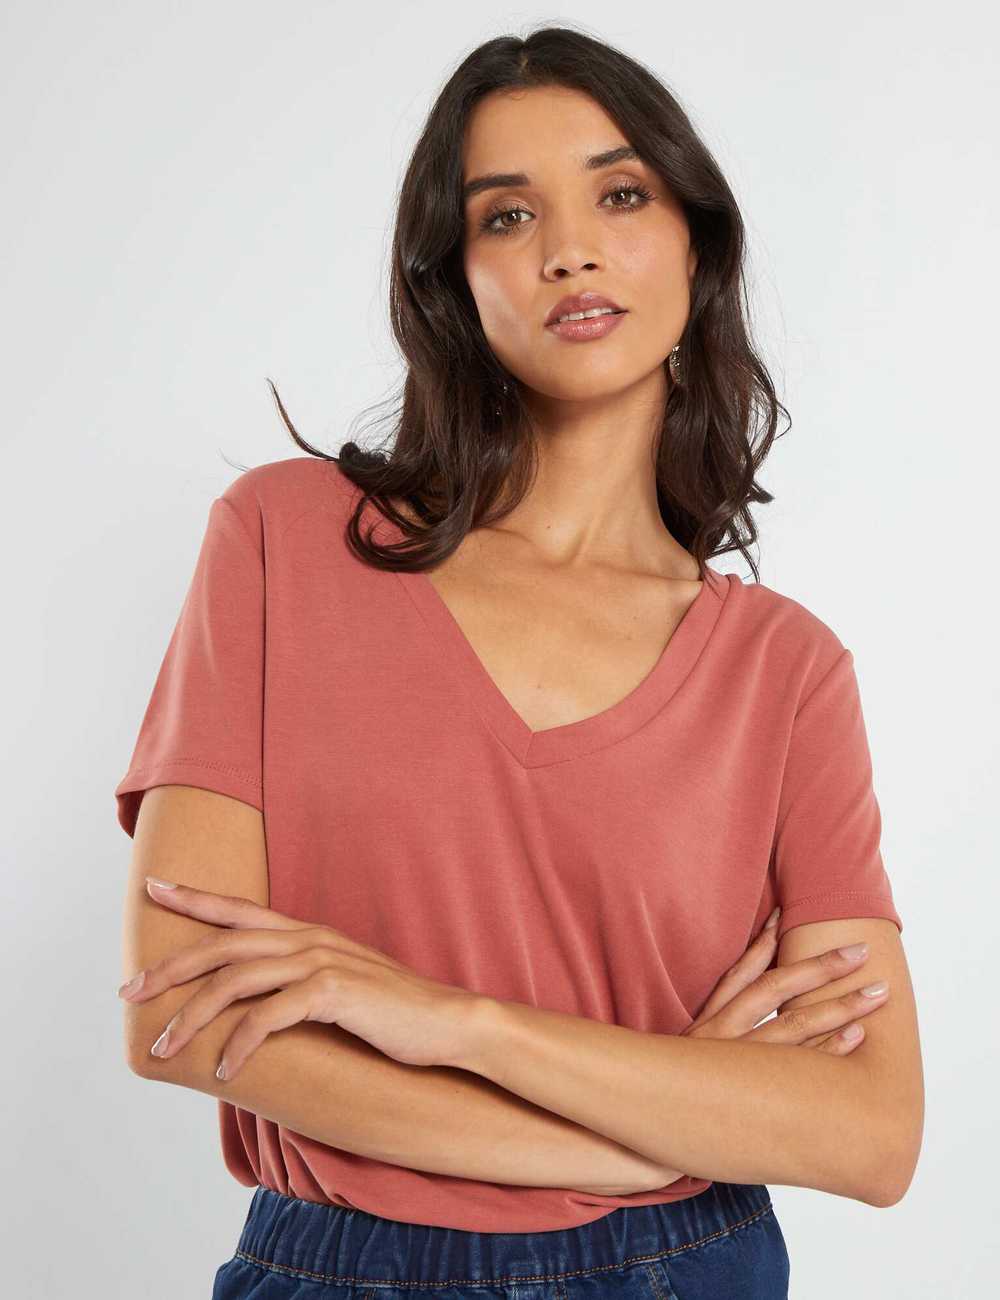 Buy Soft fabric short-sleeved T-shirt Online in Dubai & the UAE